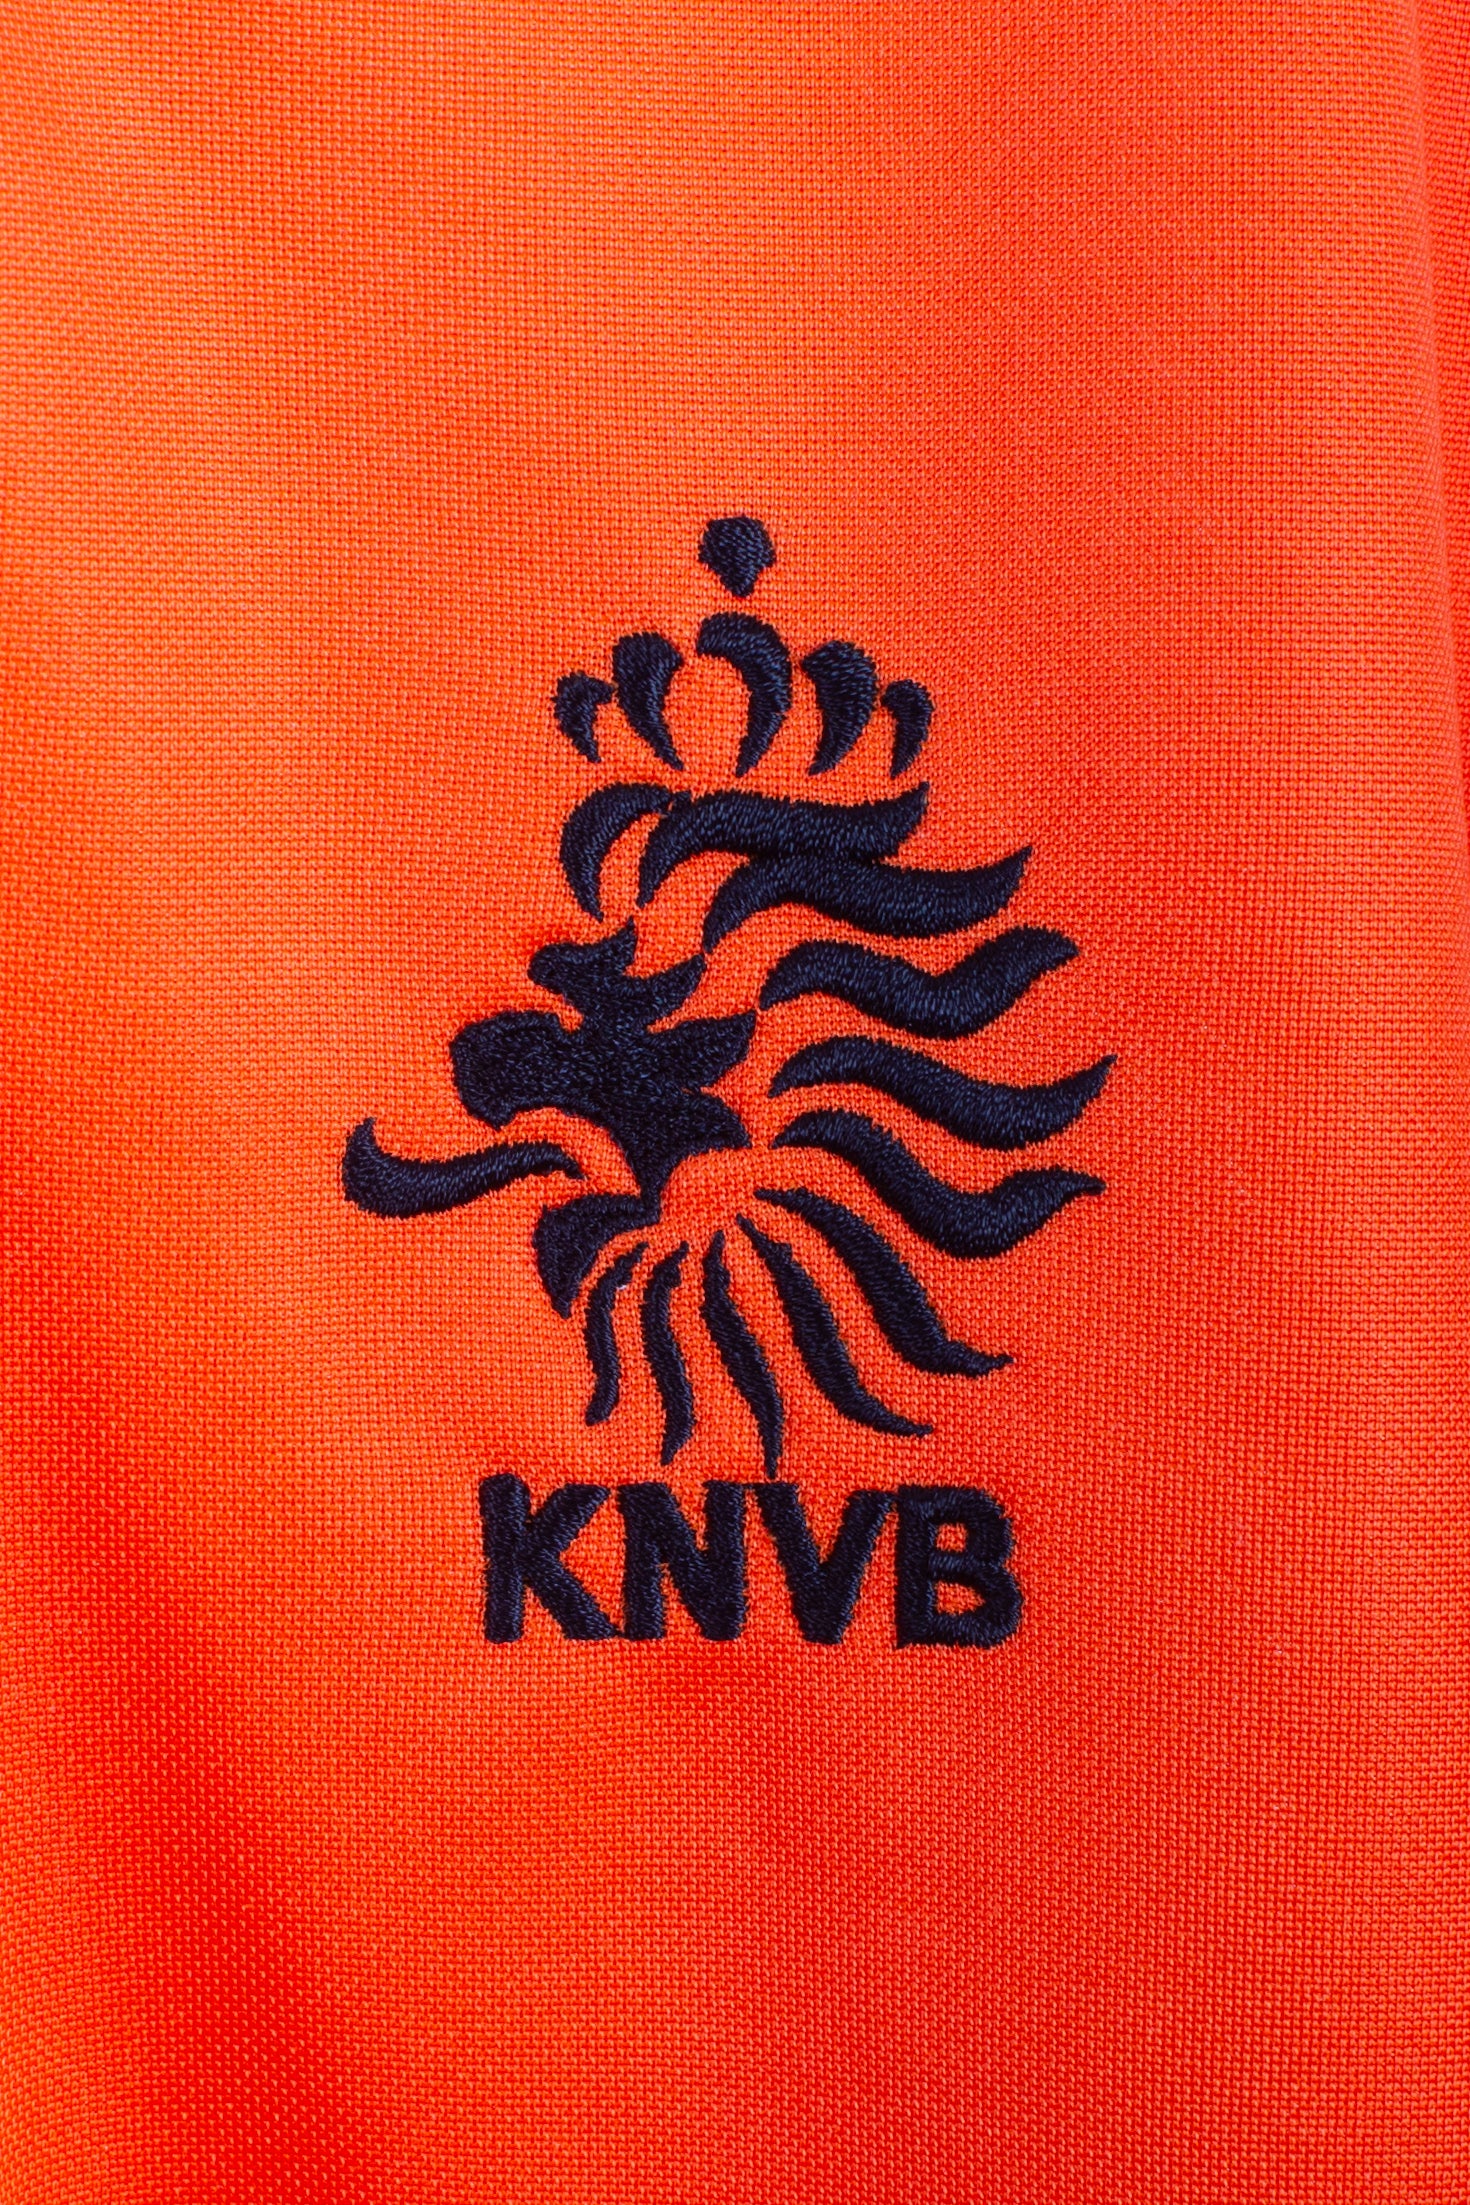 Netherlands 1998 *Player Spec* Home Shirt (L)